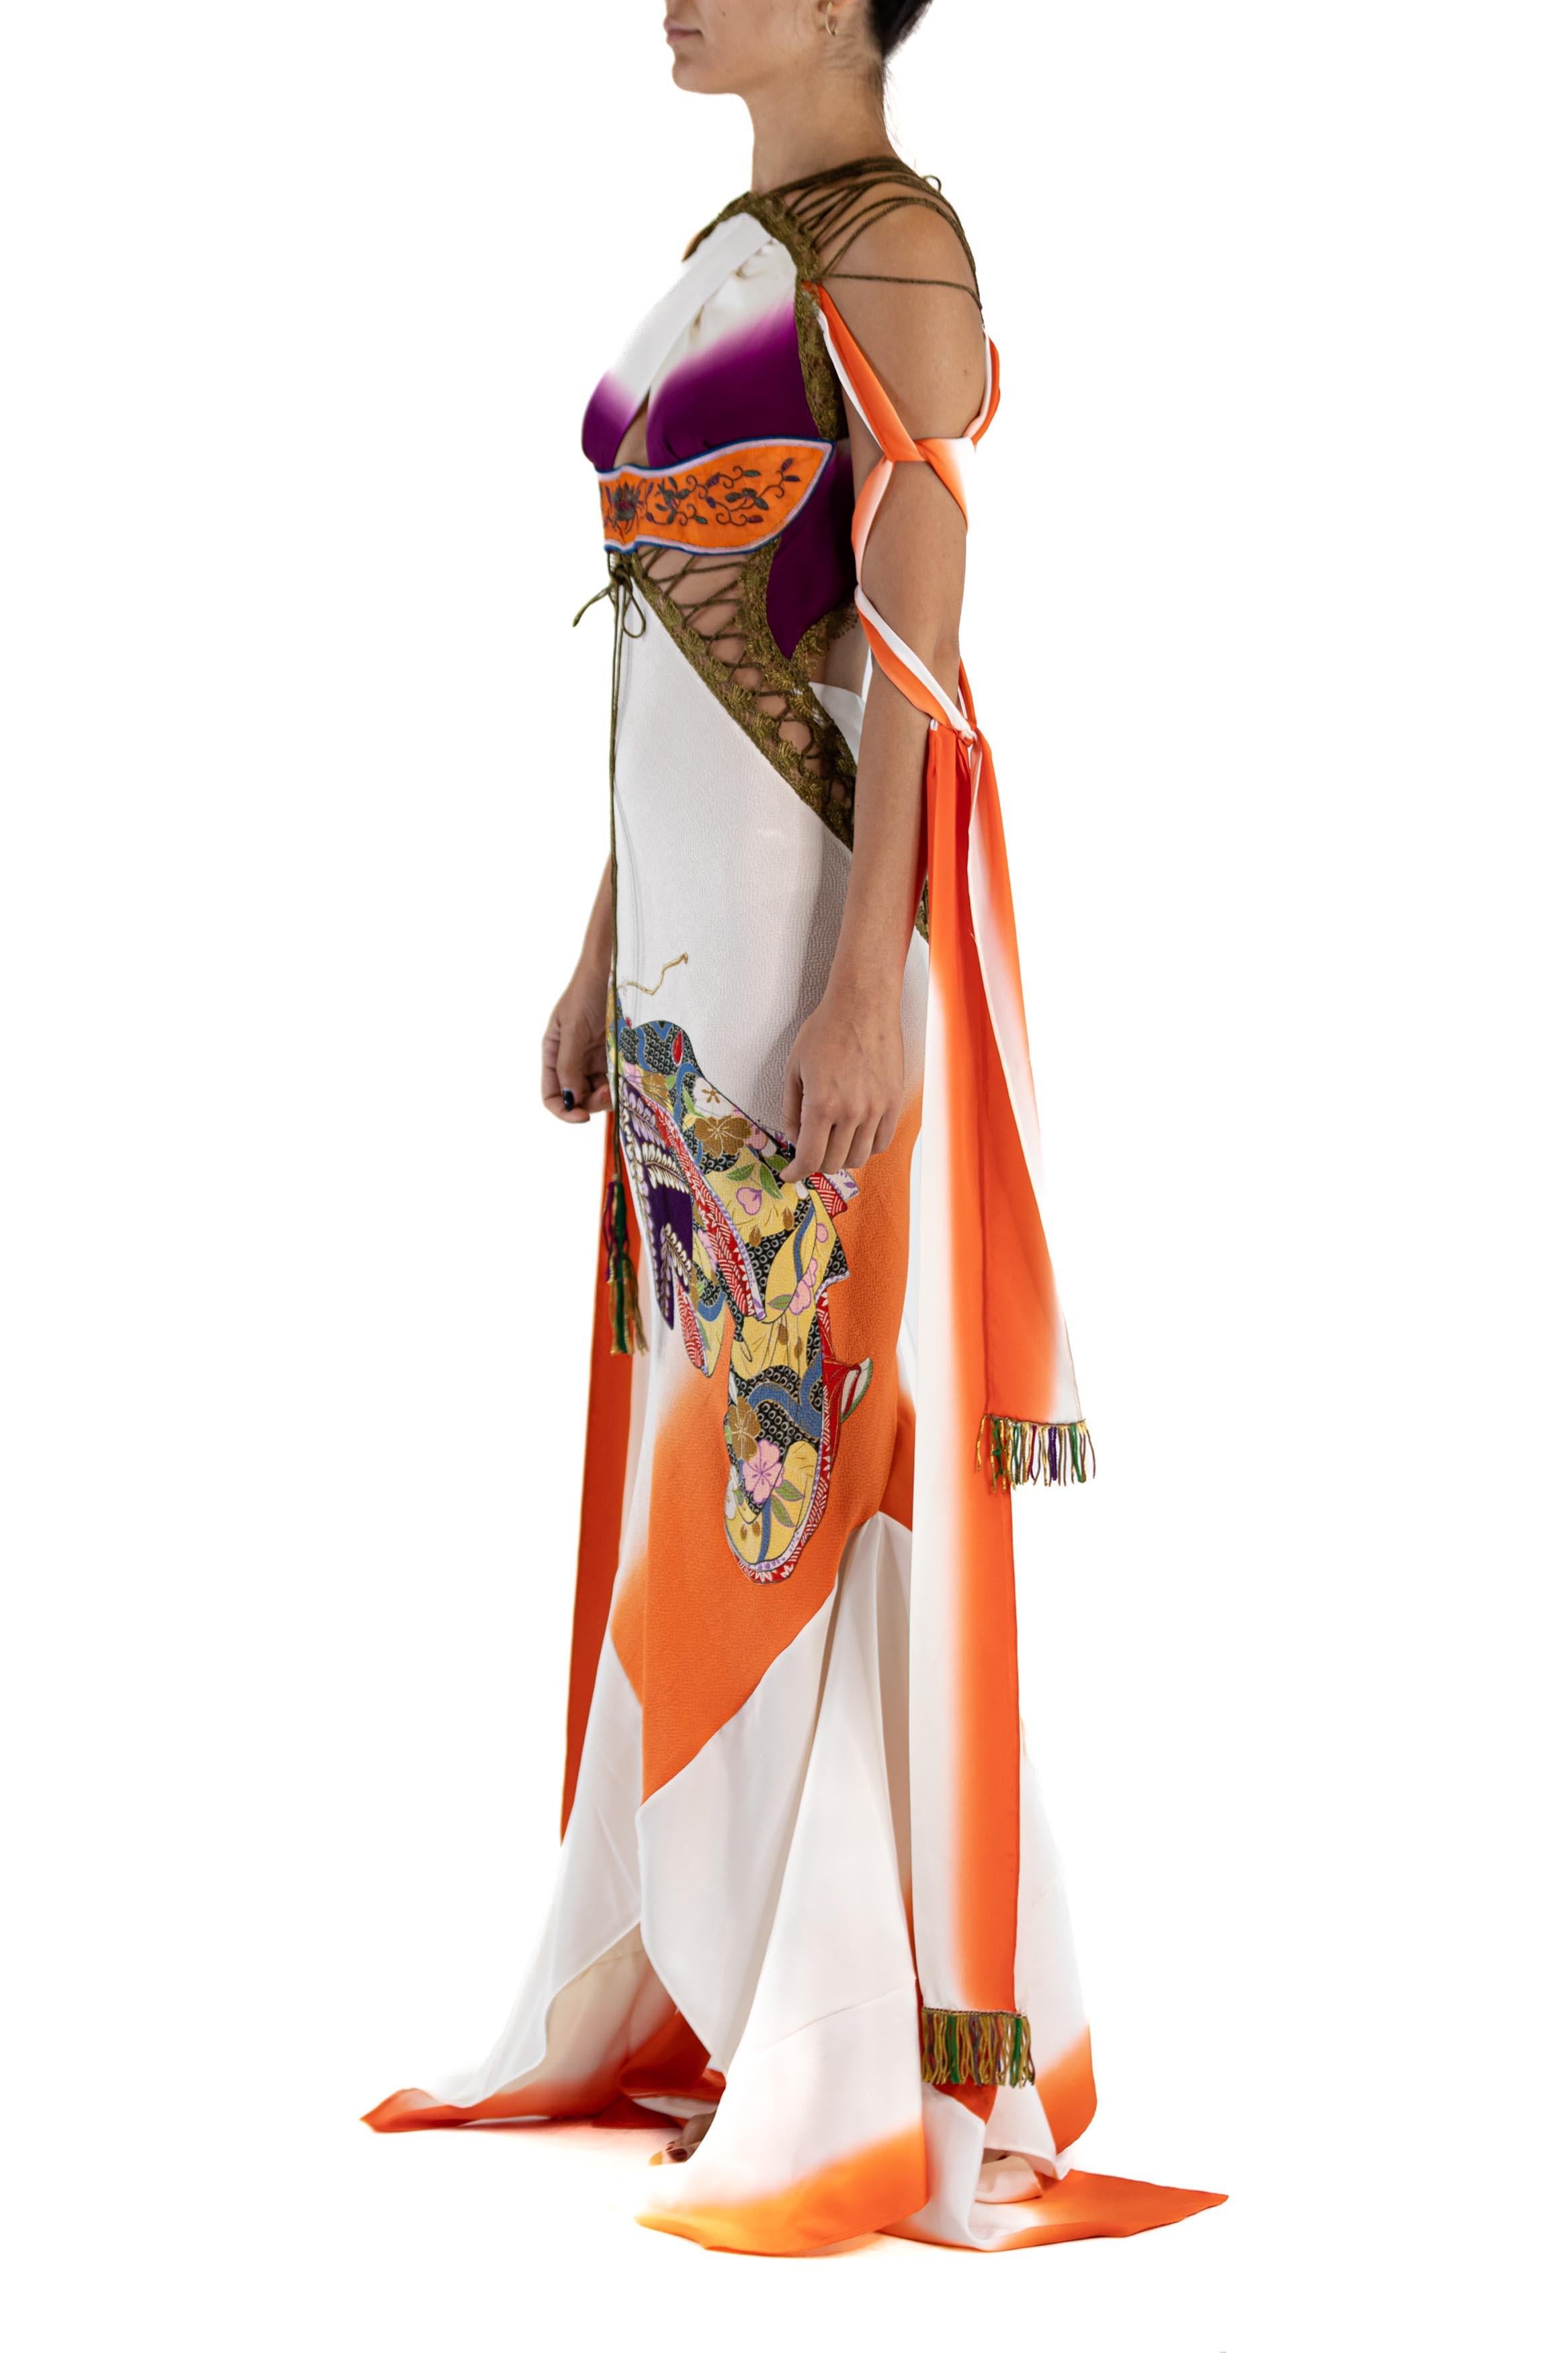 MORPHEW ATELIER Jewel-Tone Bias Cut Japanese Kimono Silk Hand Painted Gown With Metallic Gold Lacing